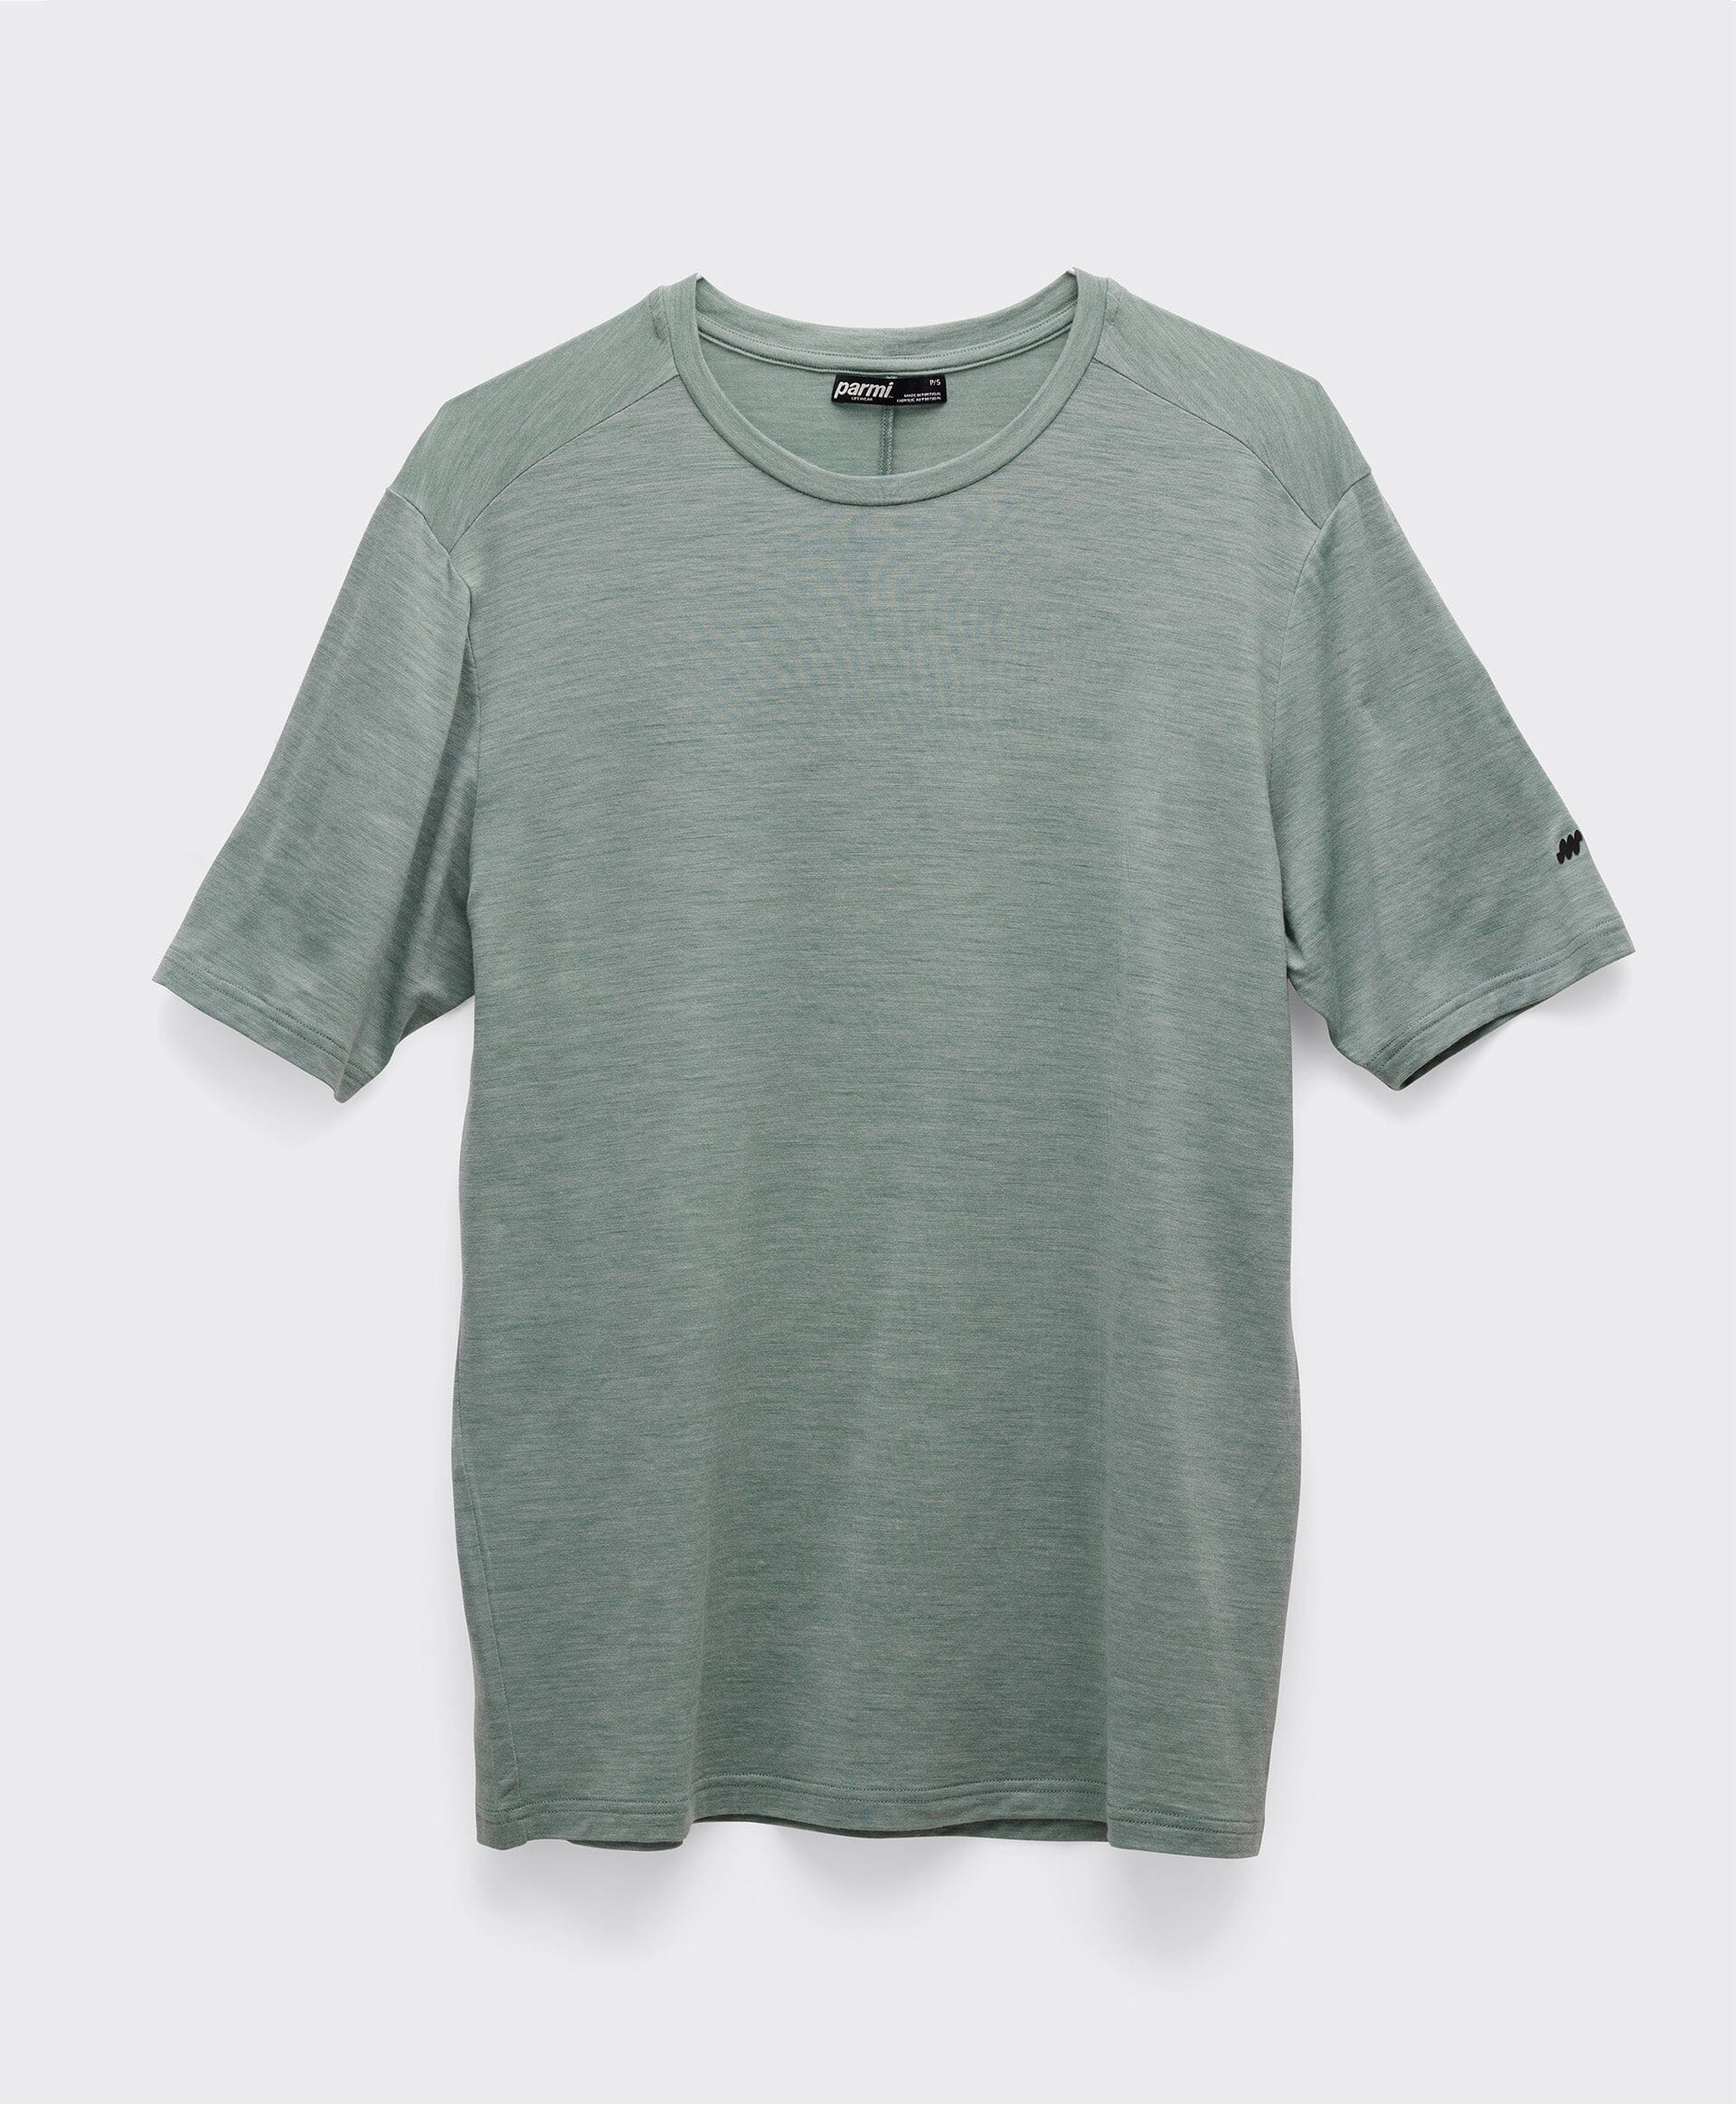 Parmi Lifewear - Merino Free Range Men's T-Shirts Parmi Sage Brush S 